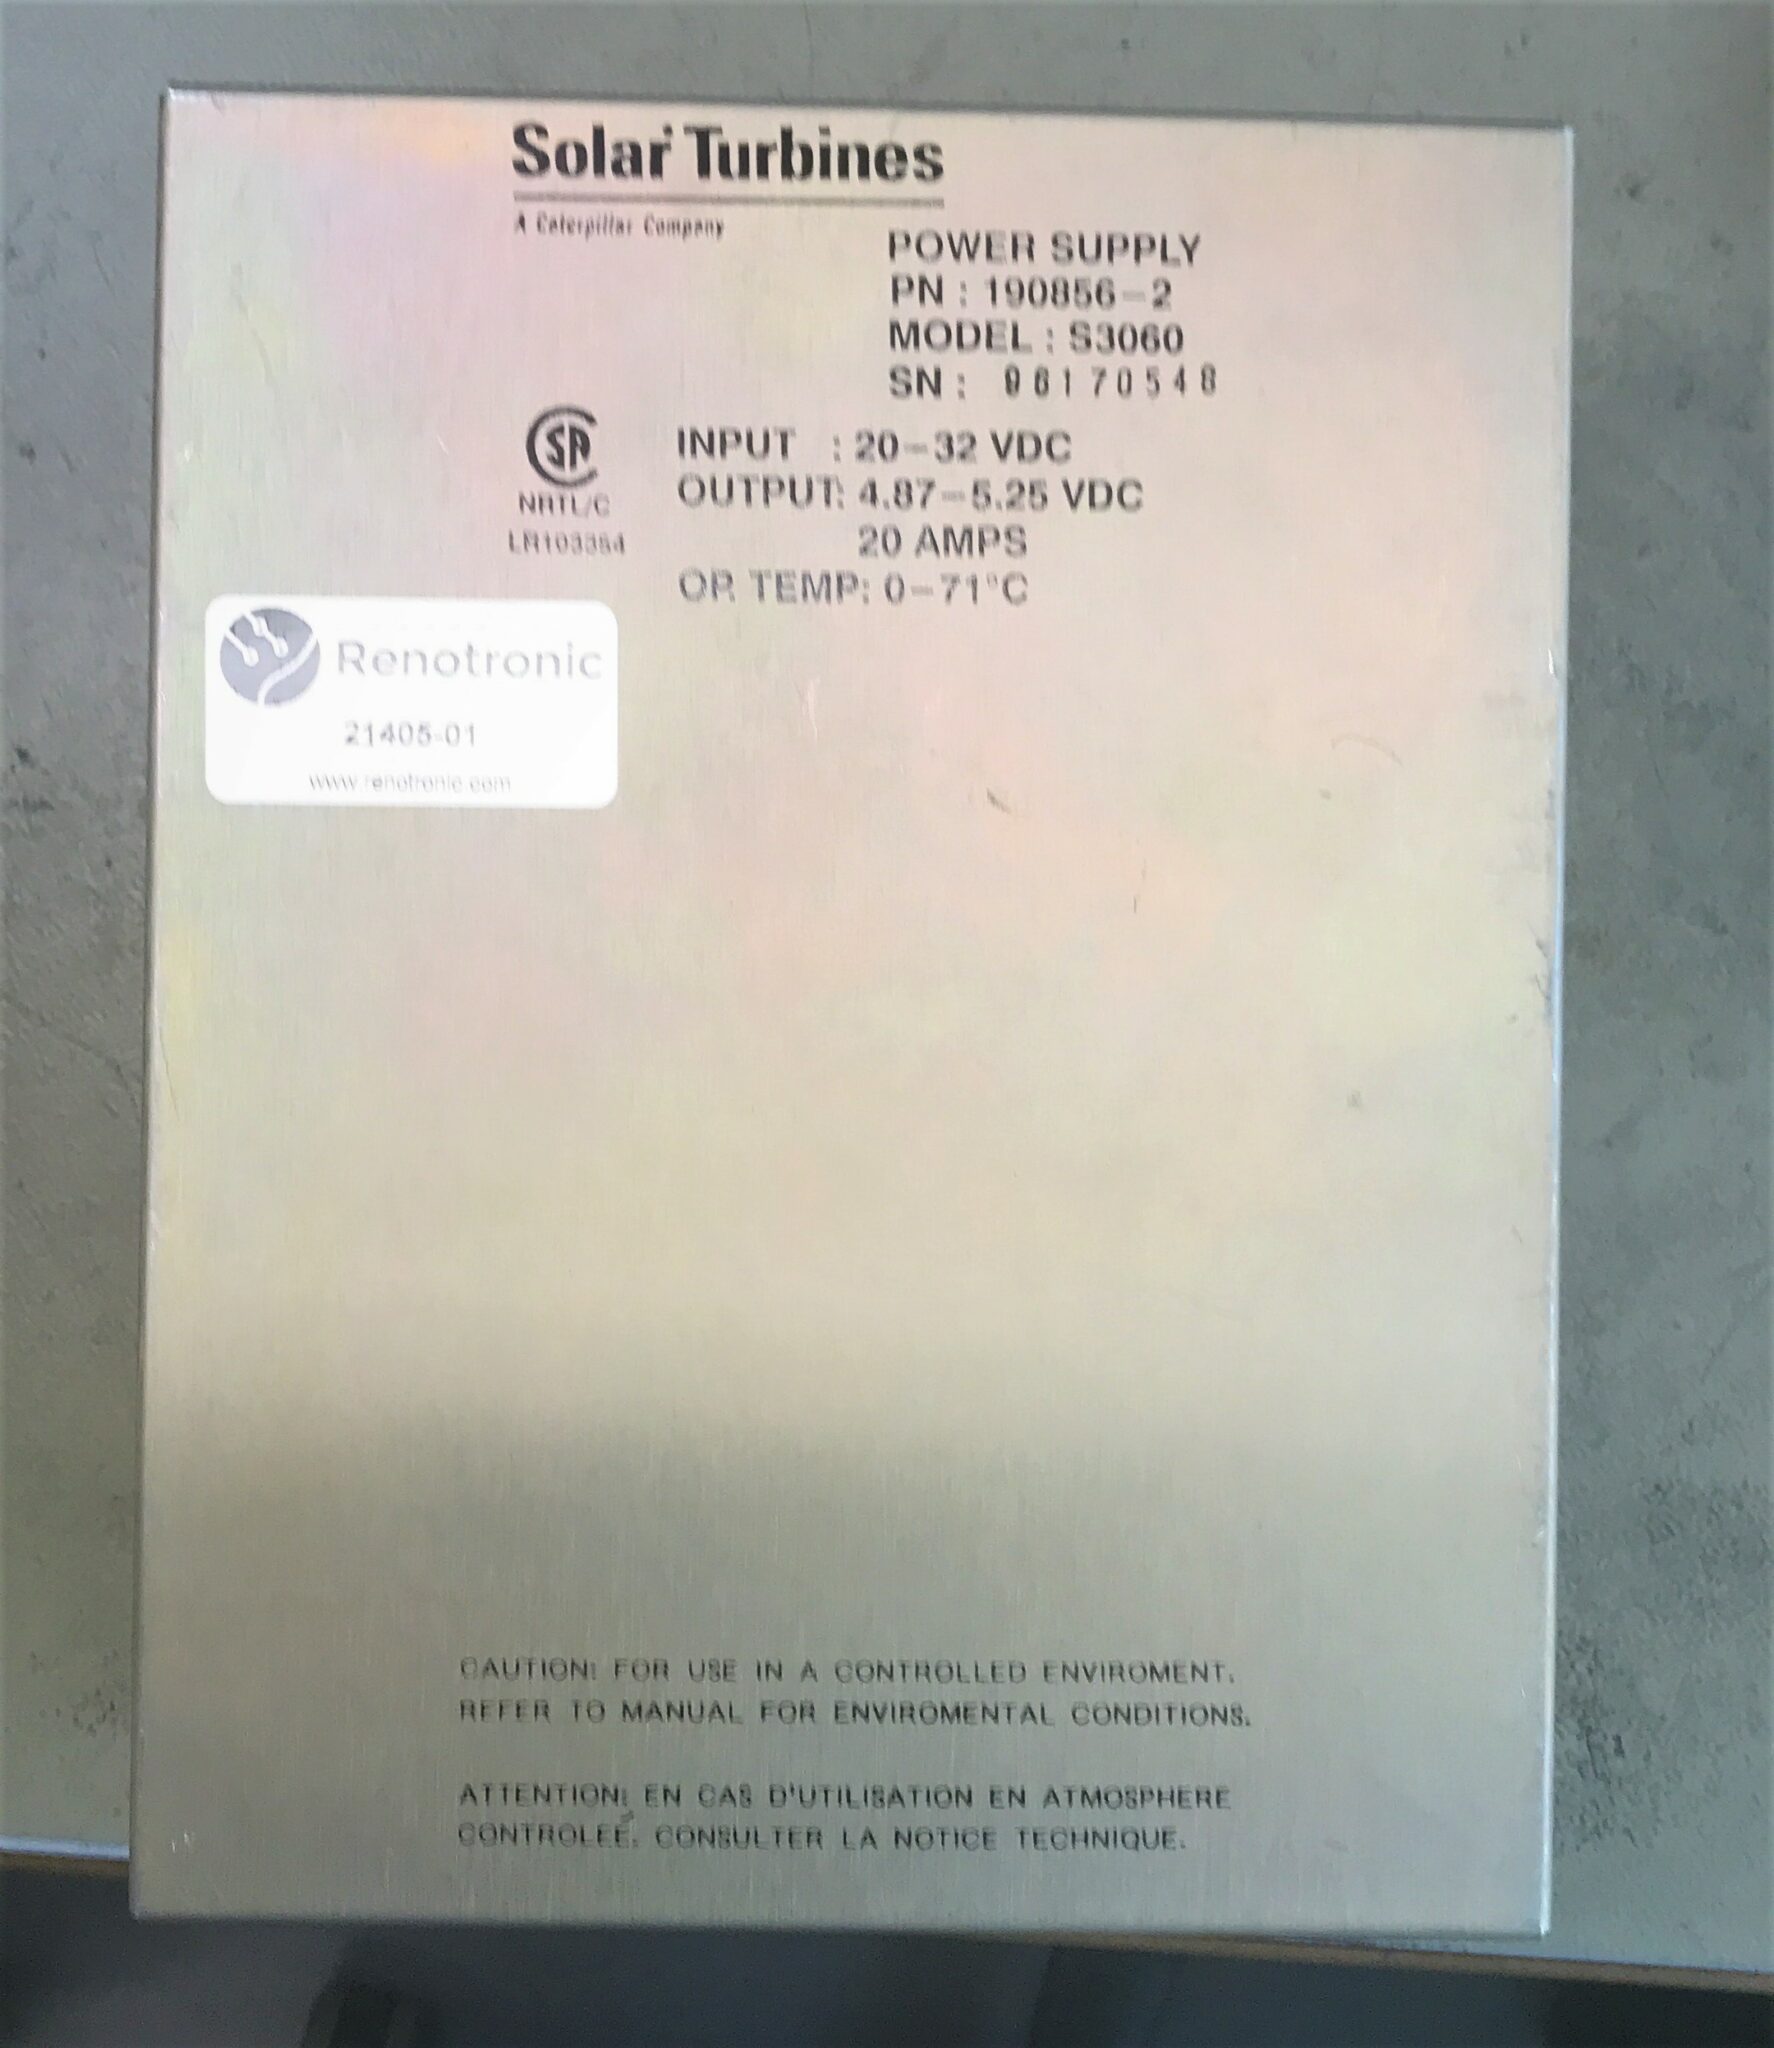 Solar Turbines S3060 Power supply